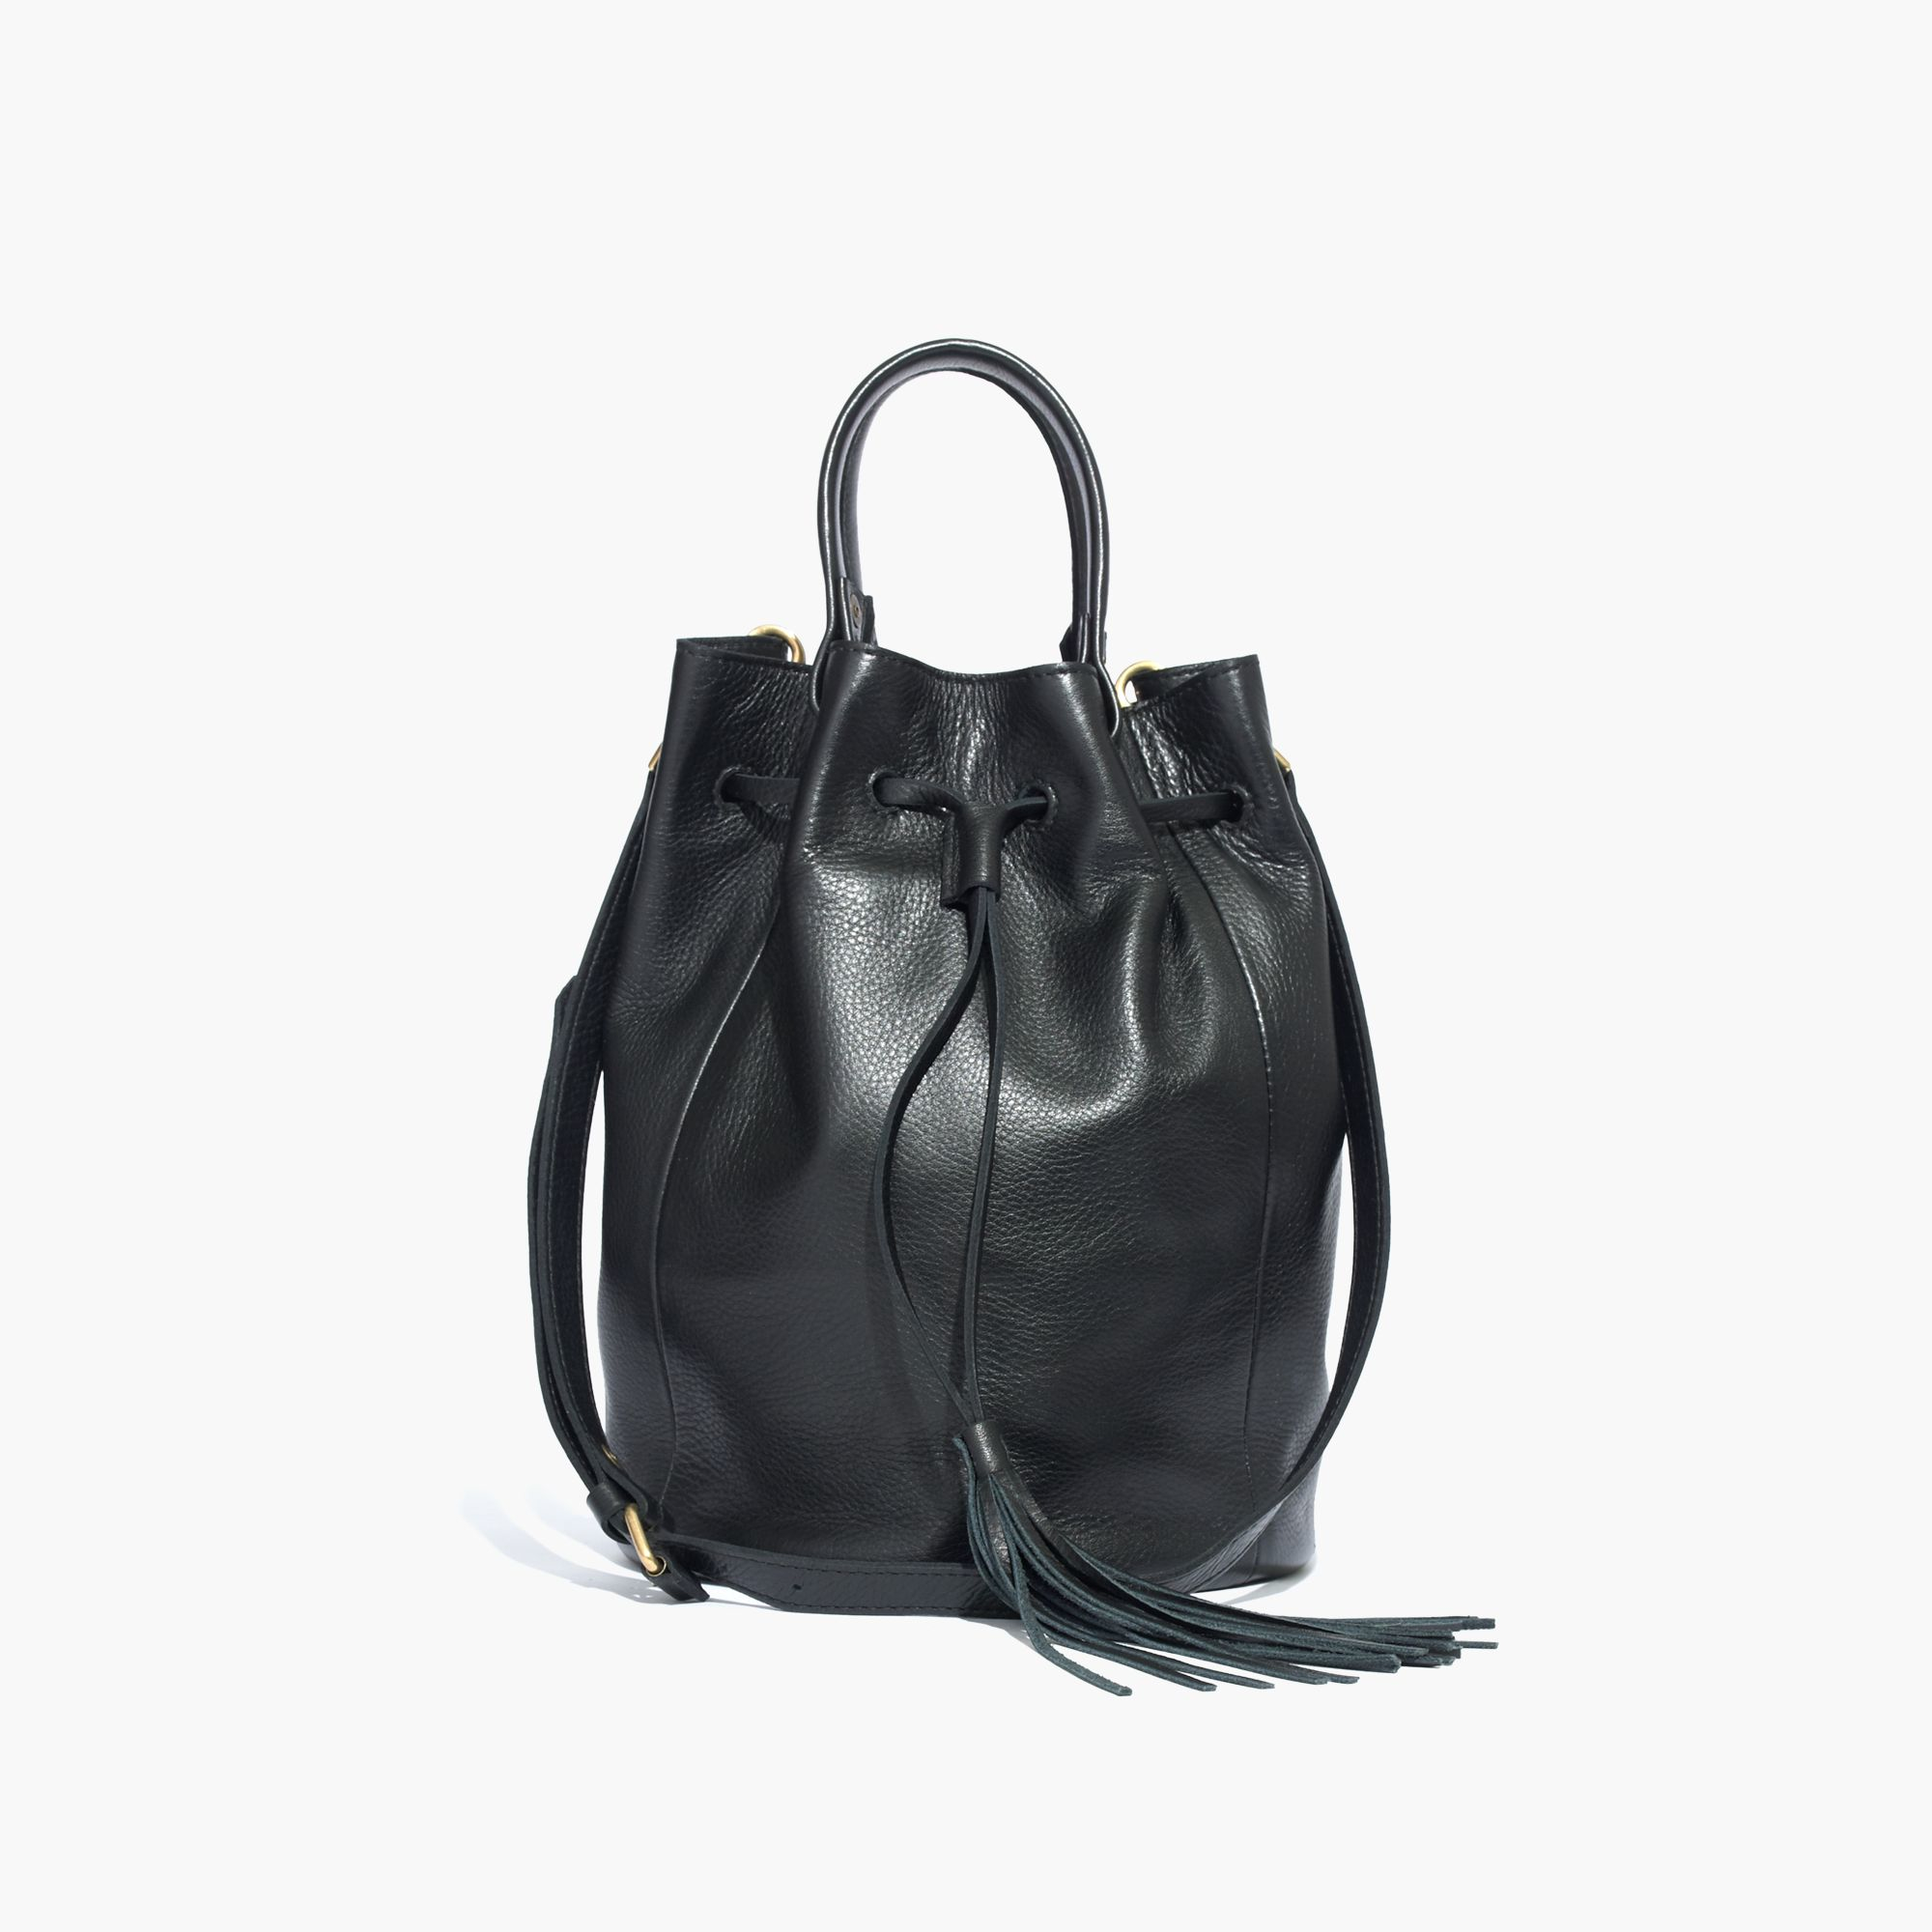 Lyst - Madewell The Austin Tassel Crossbody Bag in Black